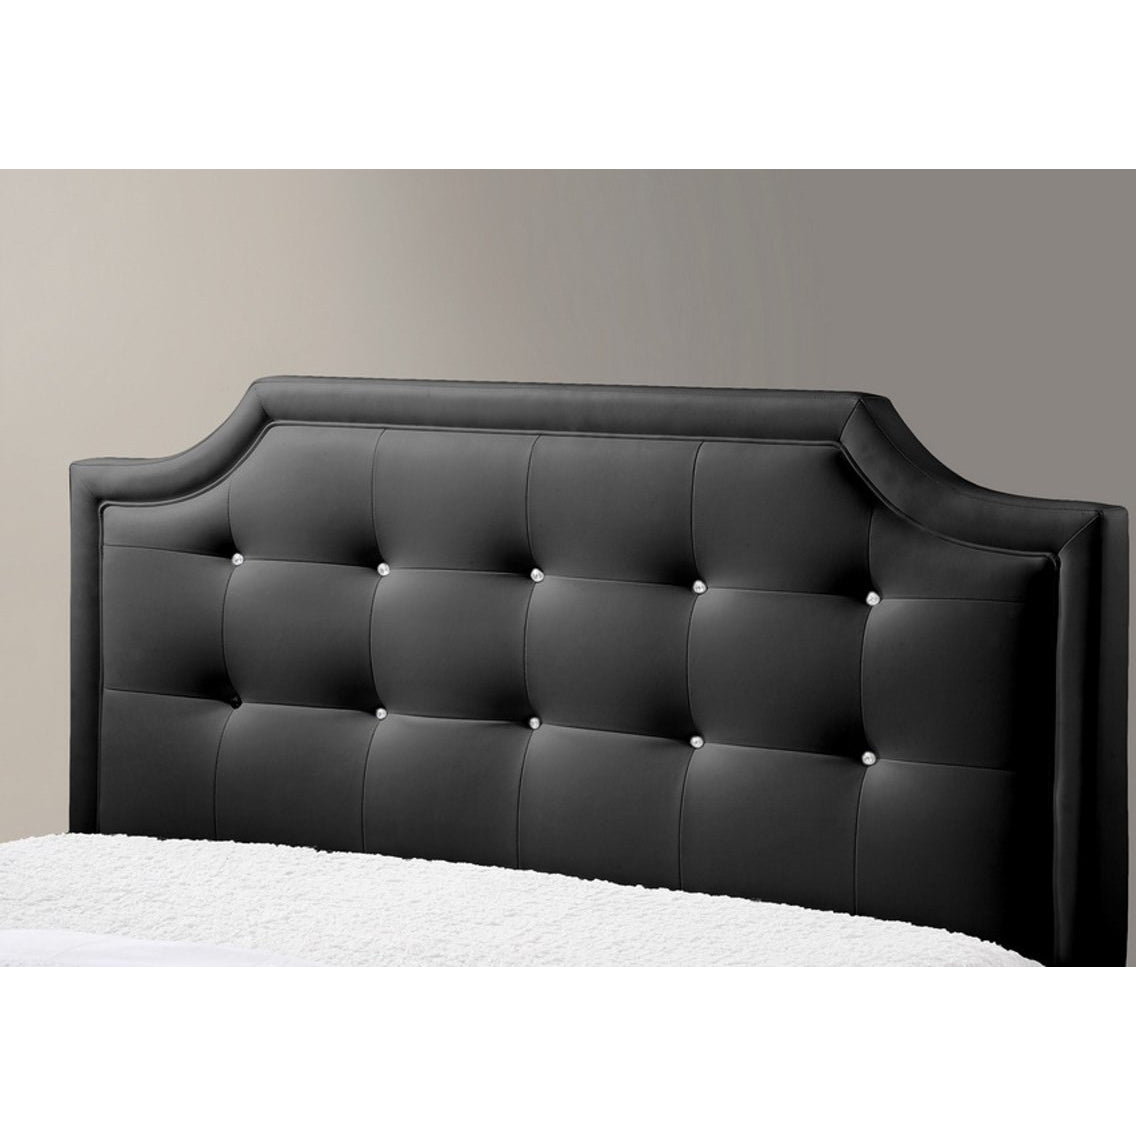 Baxton Studio Carlotta Black Modern Bed with Upholstered Headboard - King Size Baxton Studio-beds-Minimal And Modern - 2